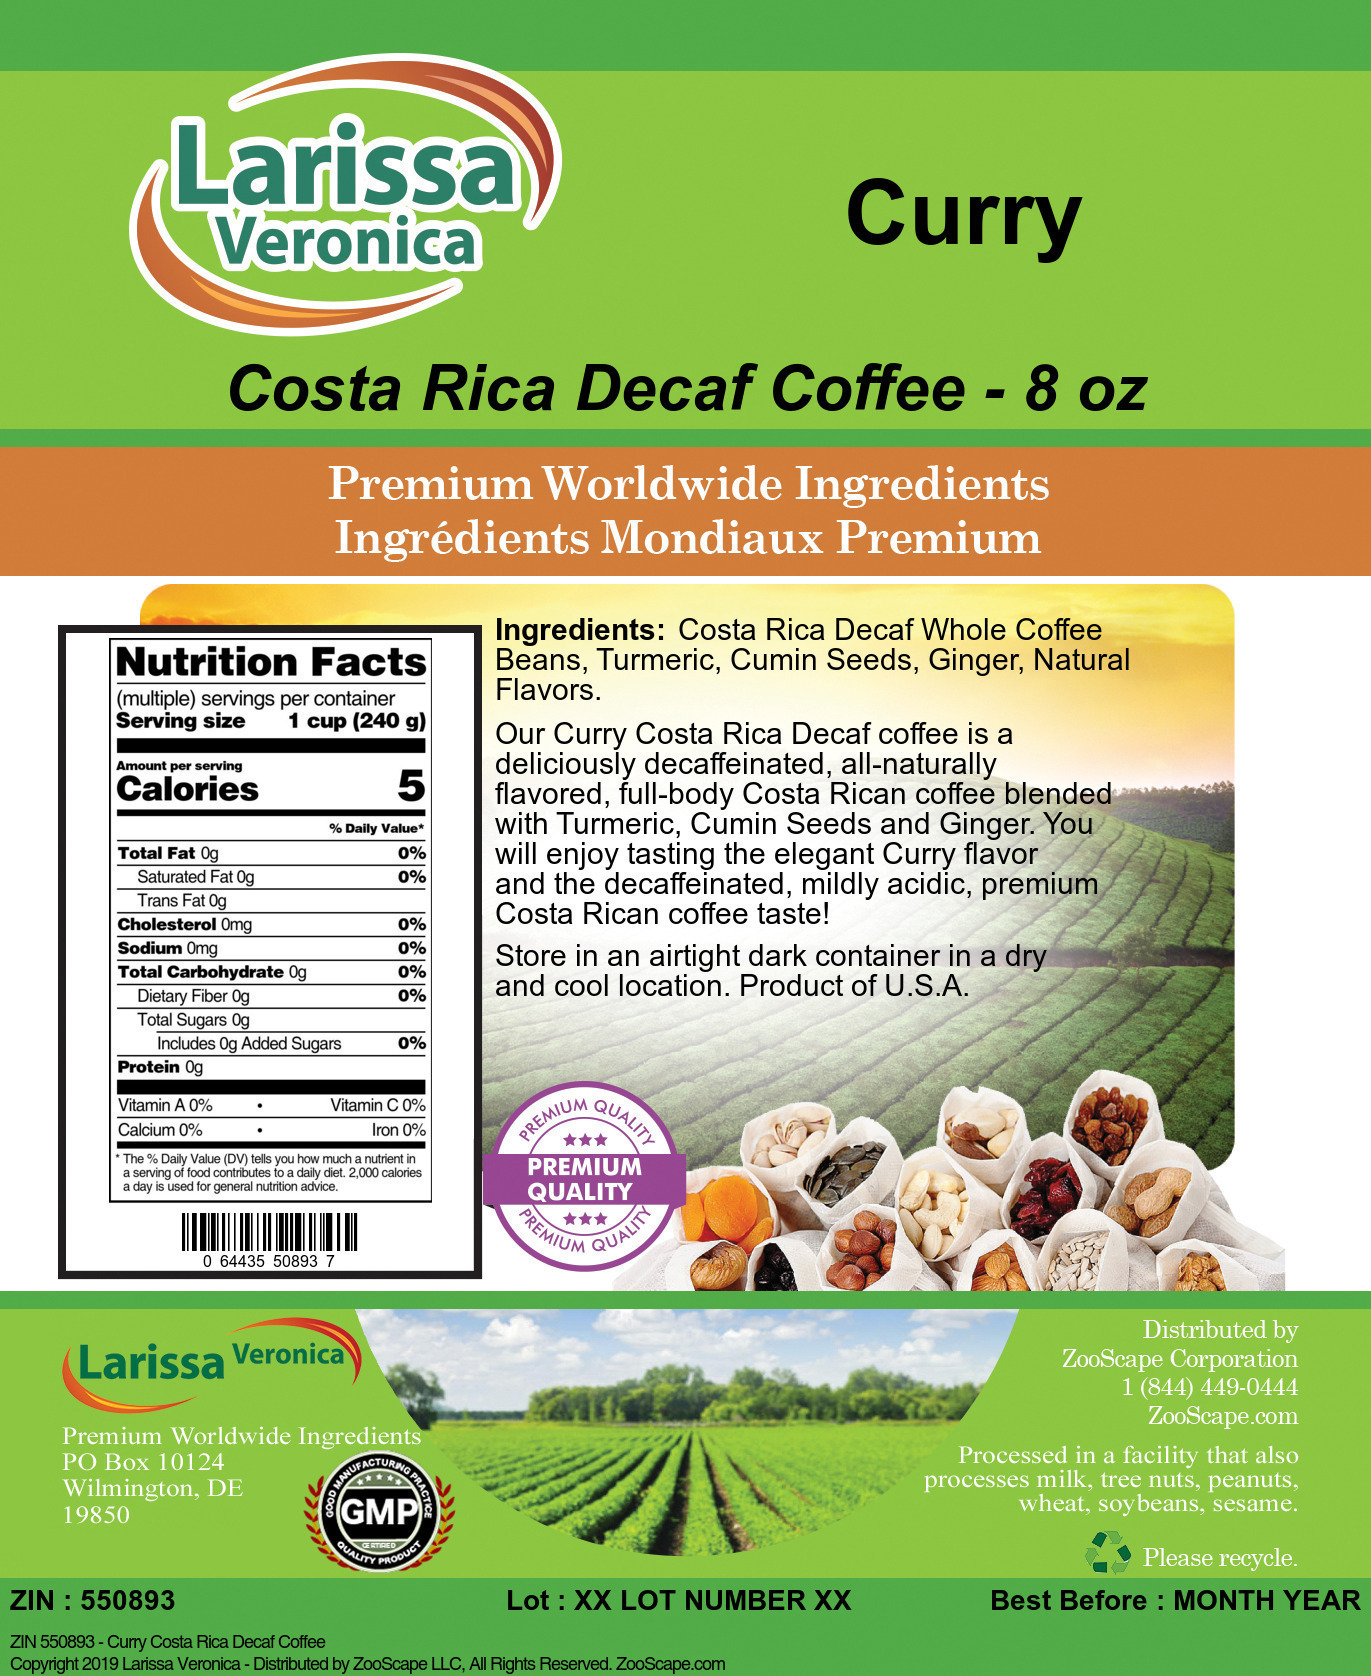 Curry Costa Rica Decaf Coffee - Label